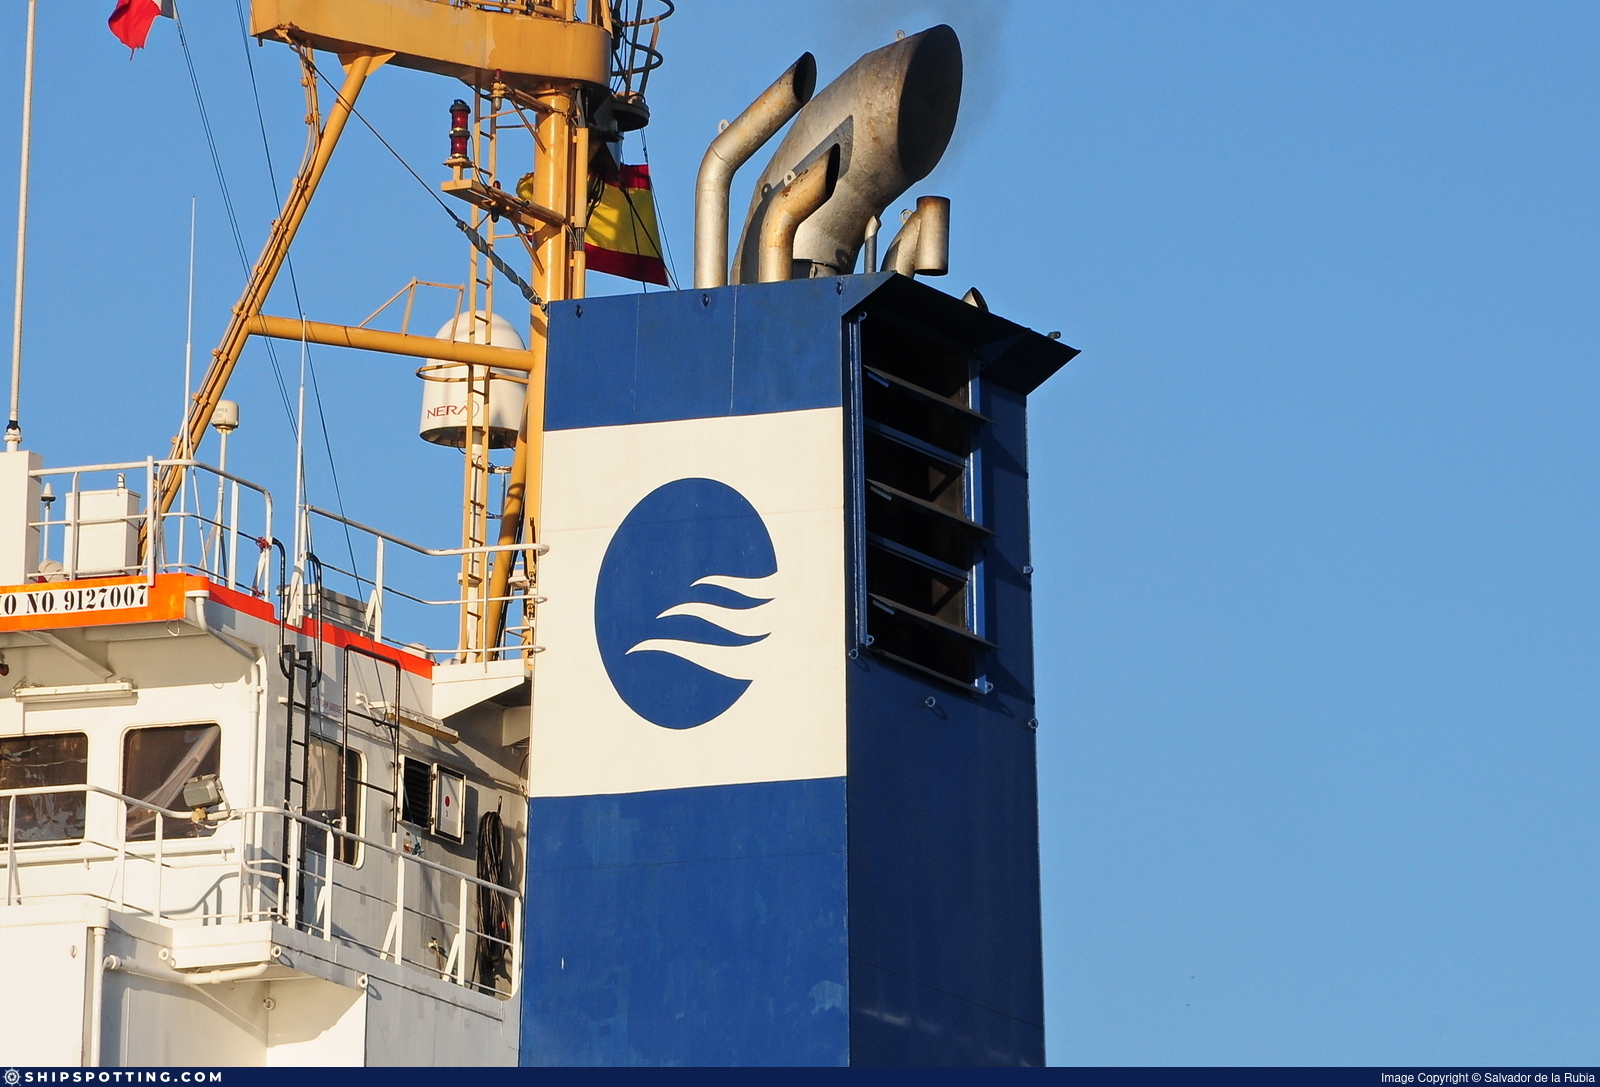 Element Shipmanagement - Piraeus/GREECE - ShipSpotting.com - Ship Photos,  Information, Videos and Ship Tracker